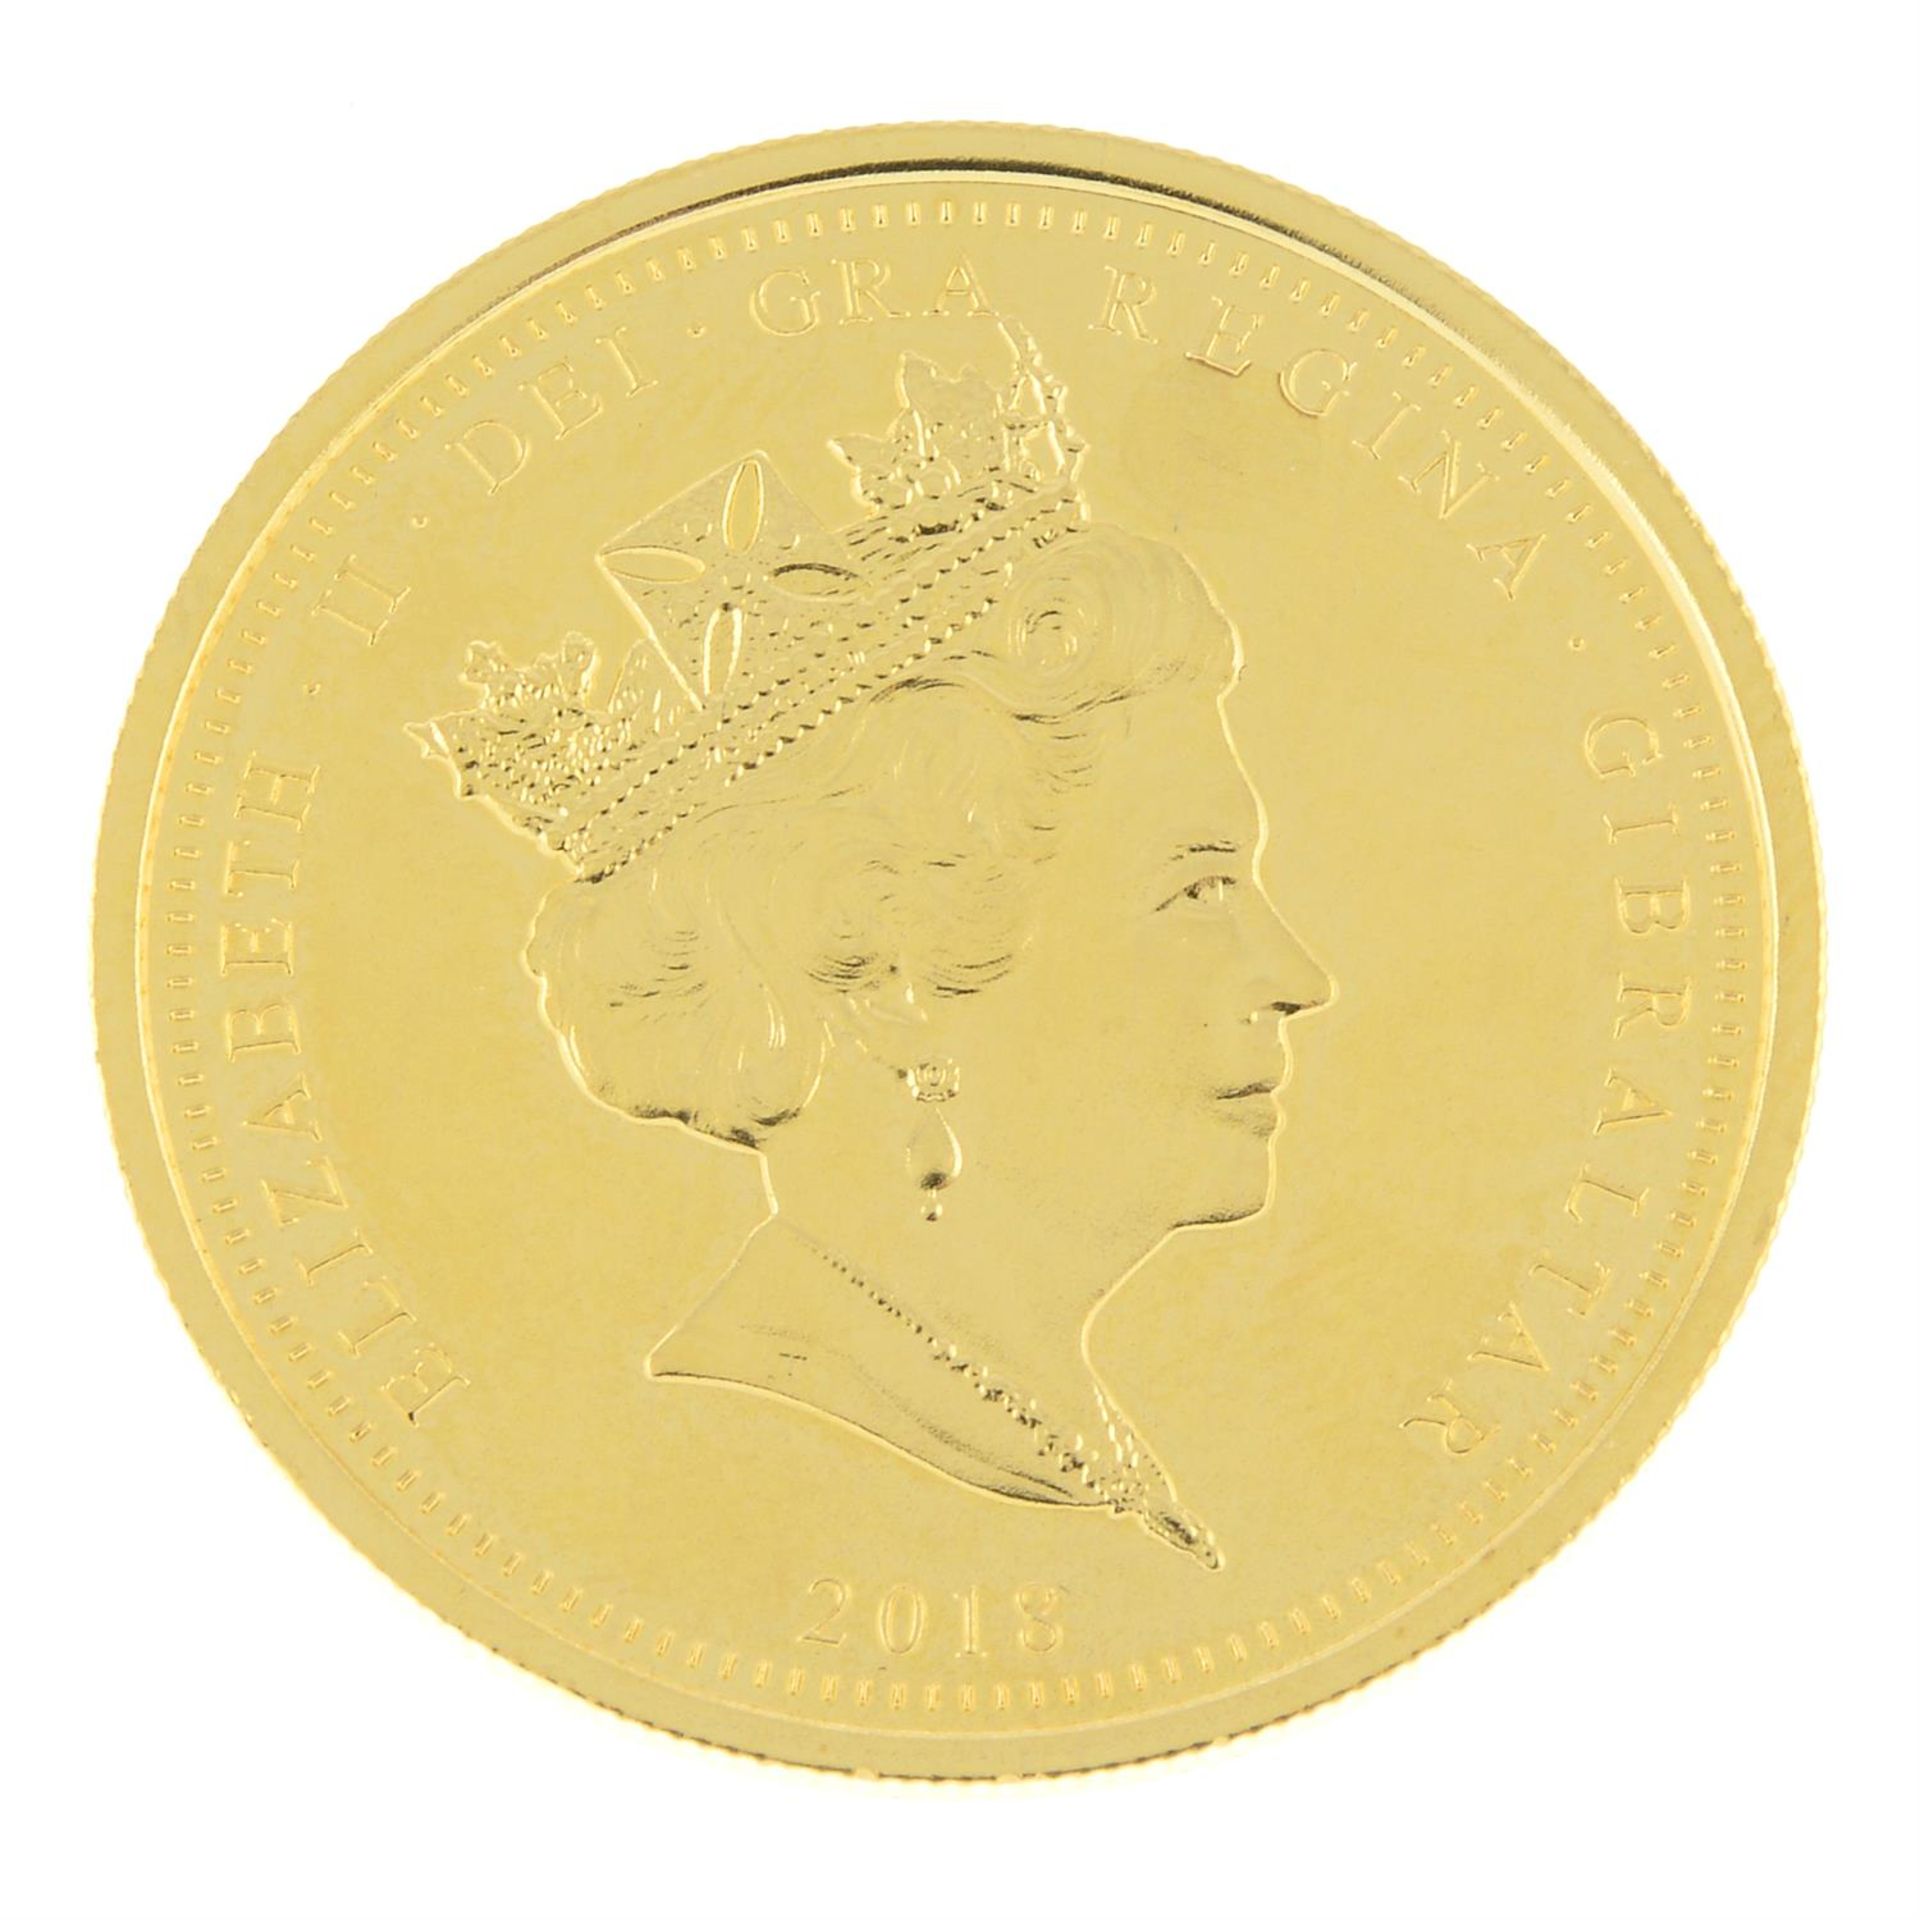 Gibraltar, Elizabeth II, gold commemorative Double-Sovereign 2018.